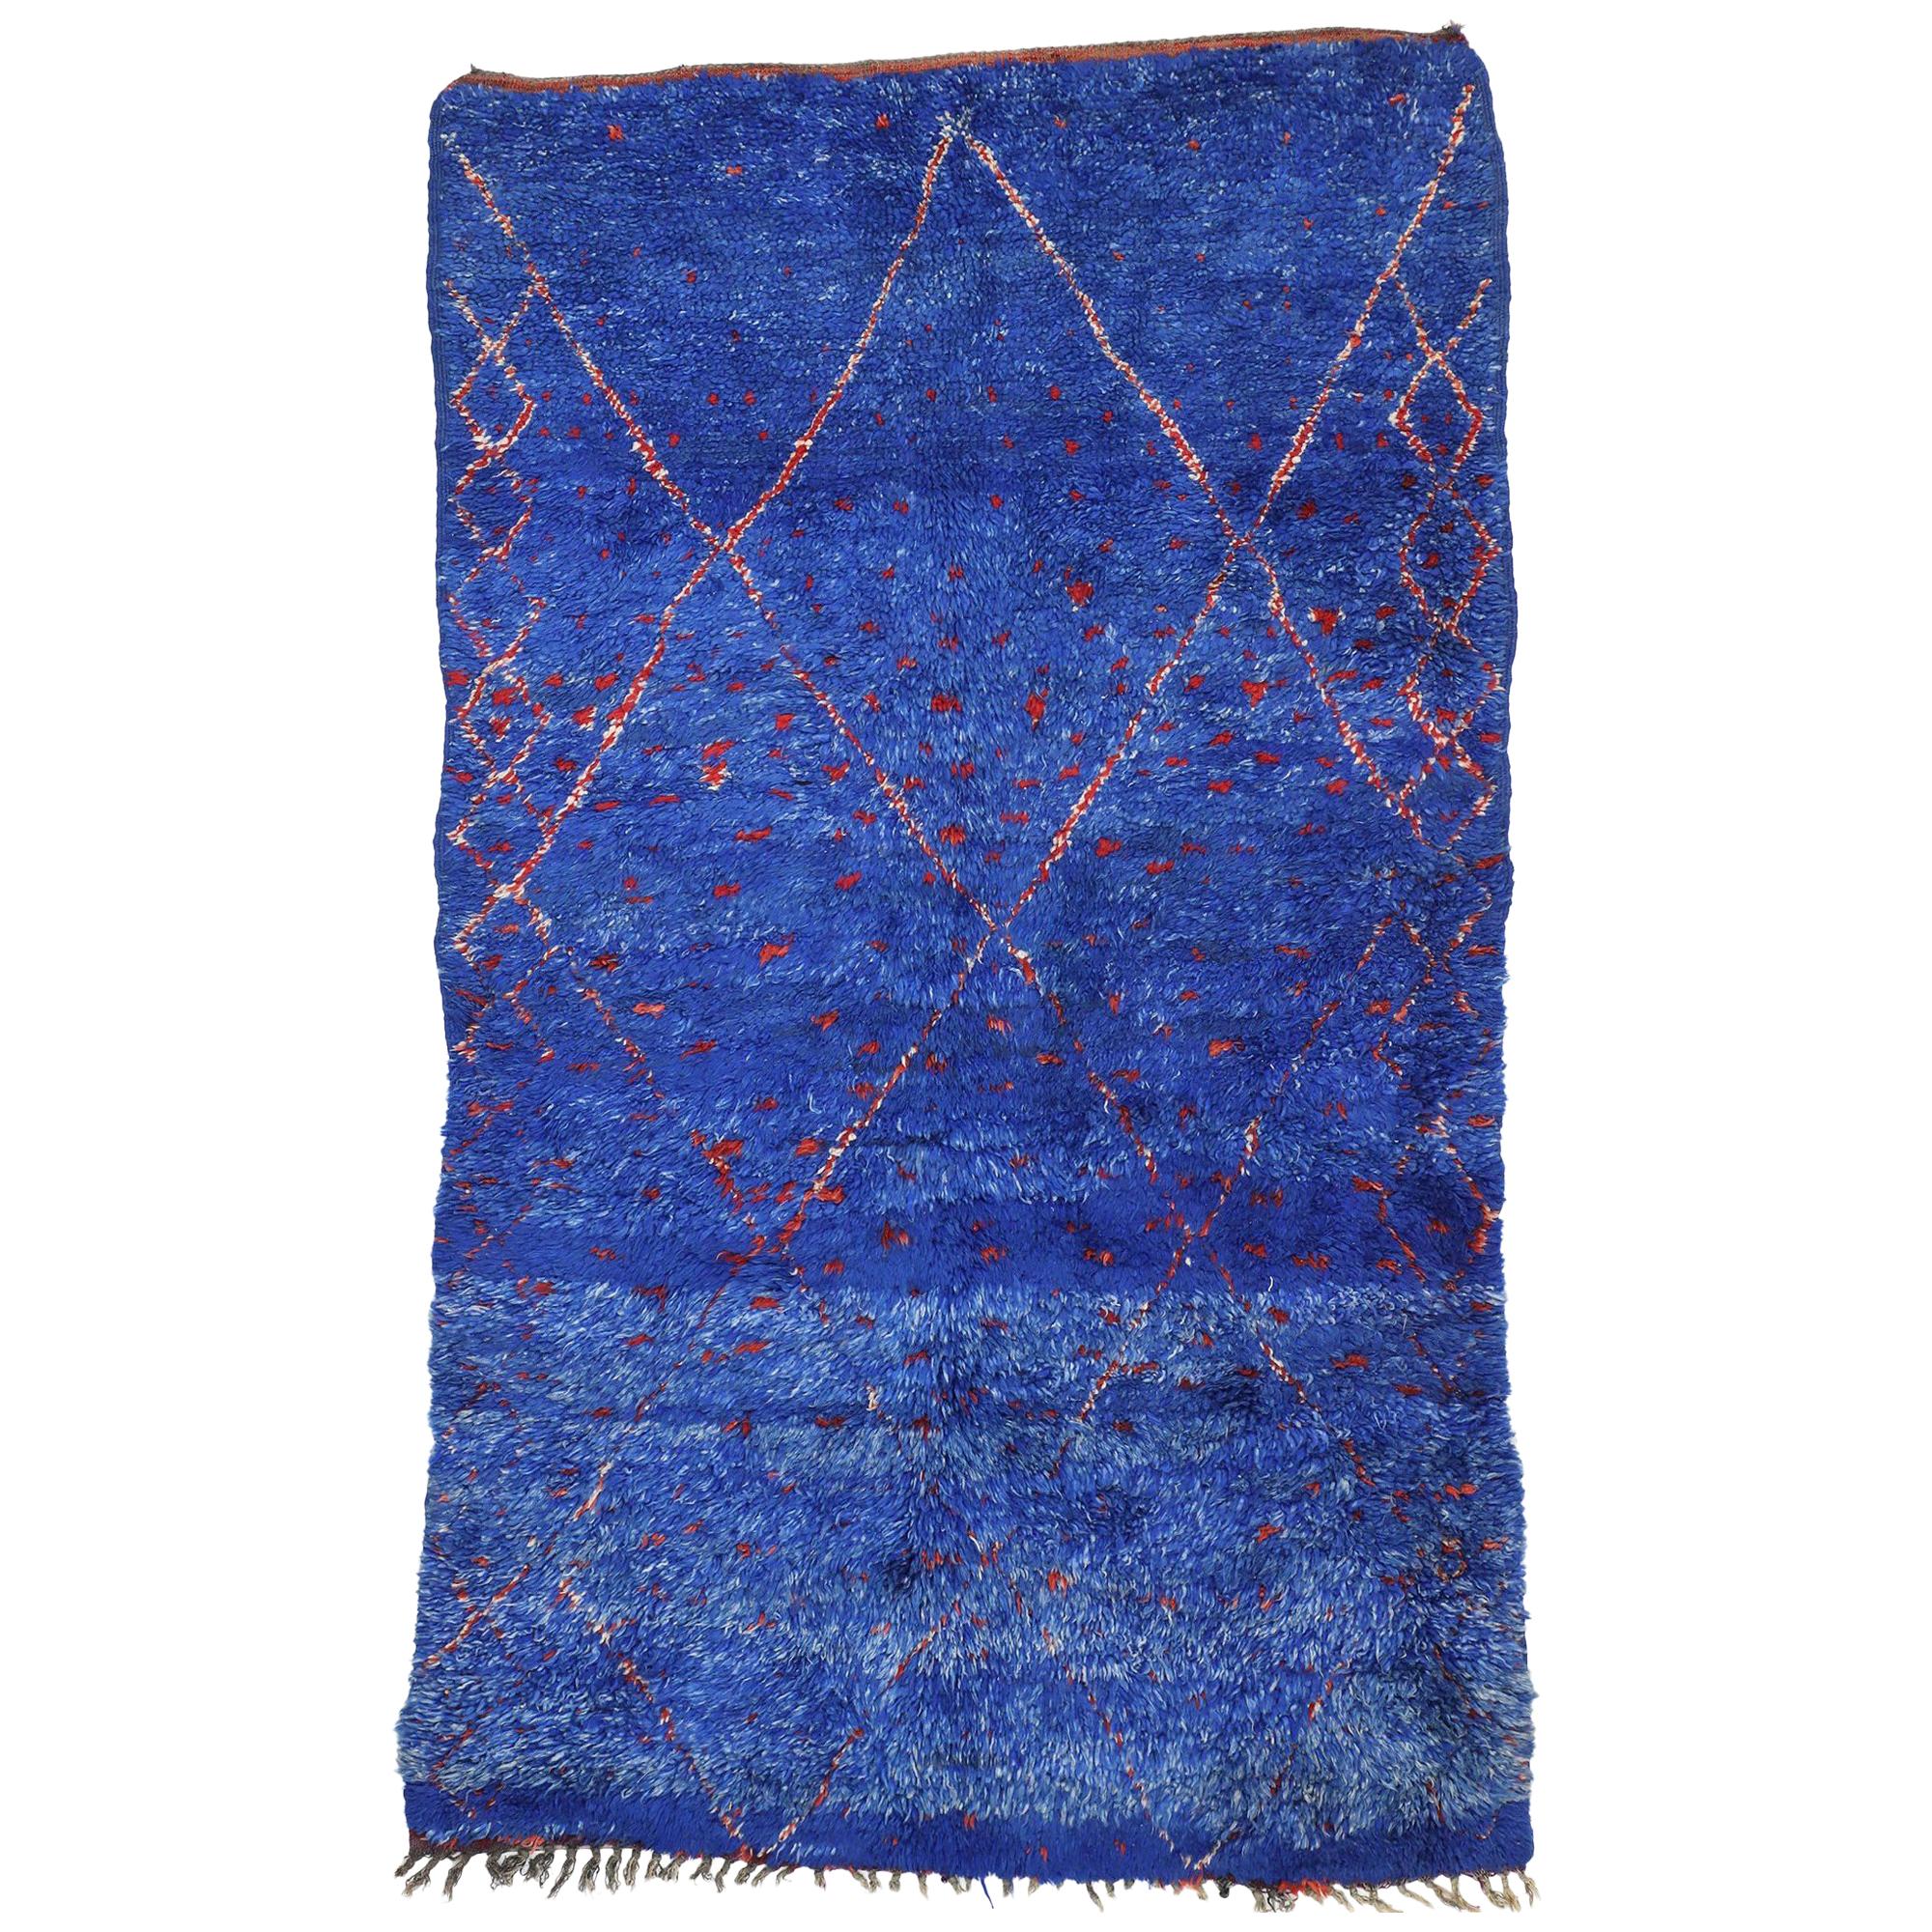 Vintage Moroccan Rug, Blue Indigo Moroccan Beni Ourain Rug